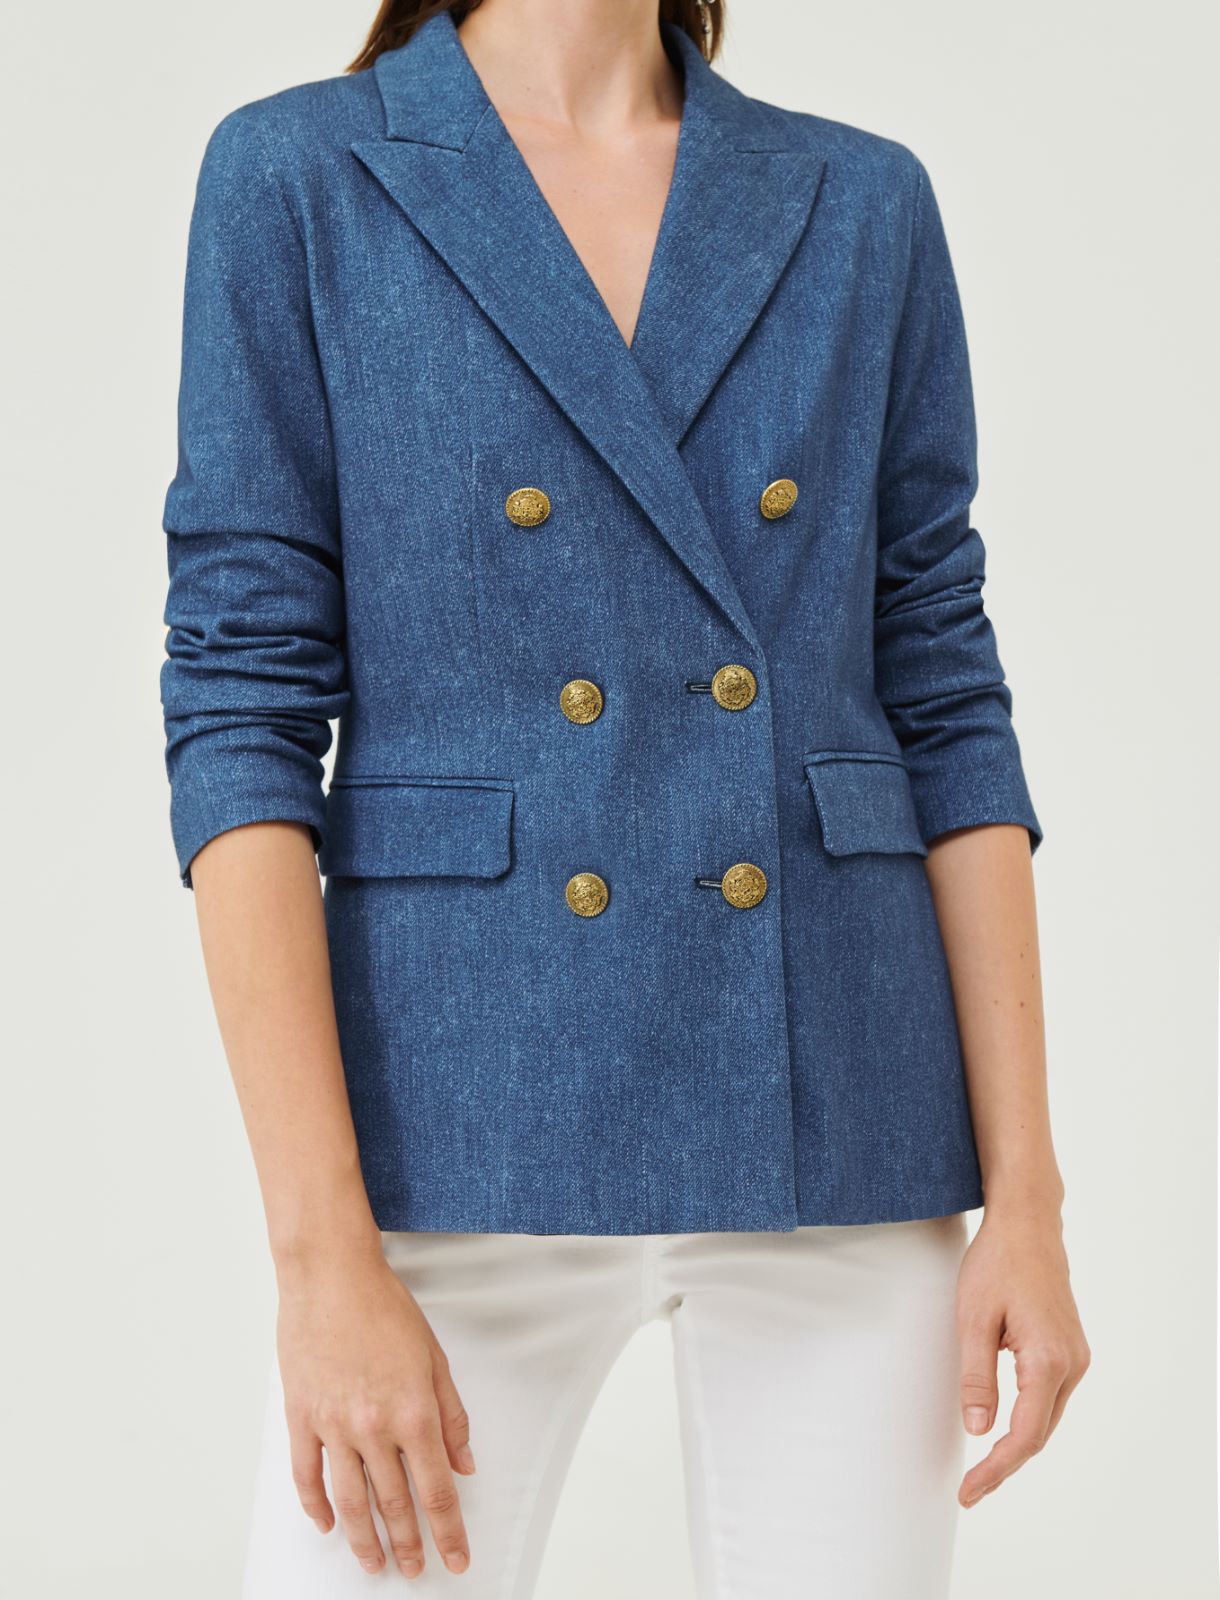 Patterned blazer - Cornflower blue - Marina Rinaldi - 4